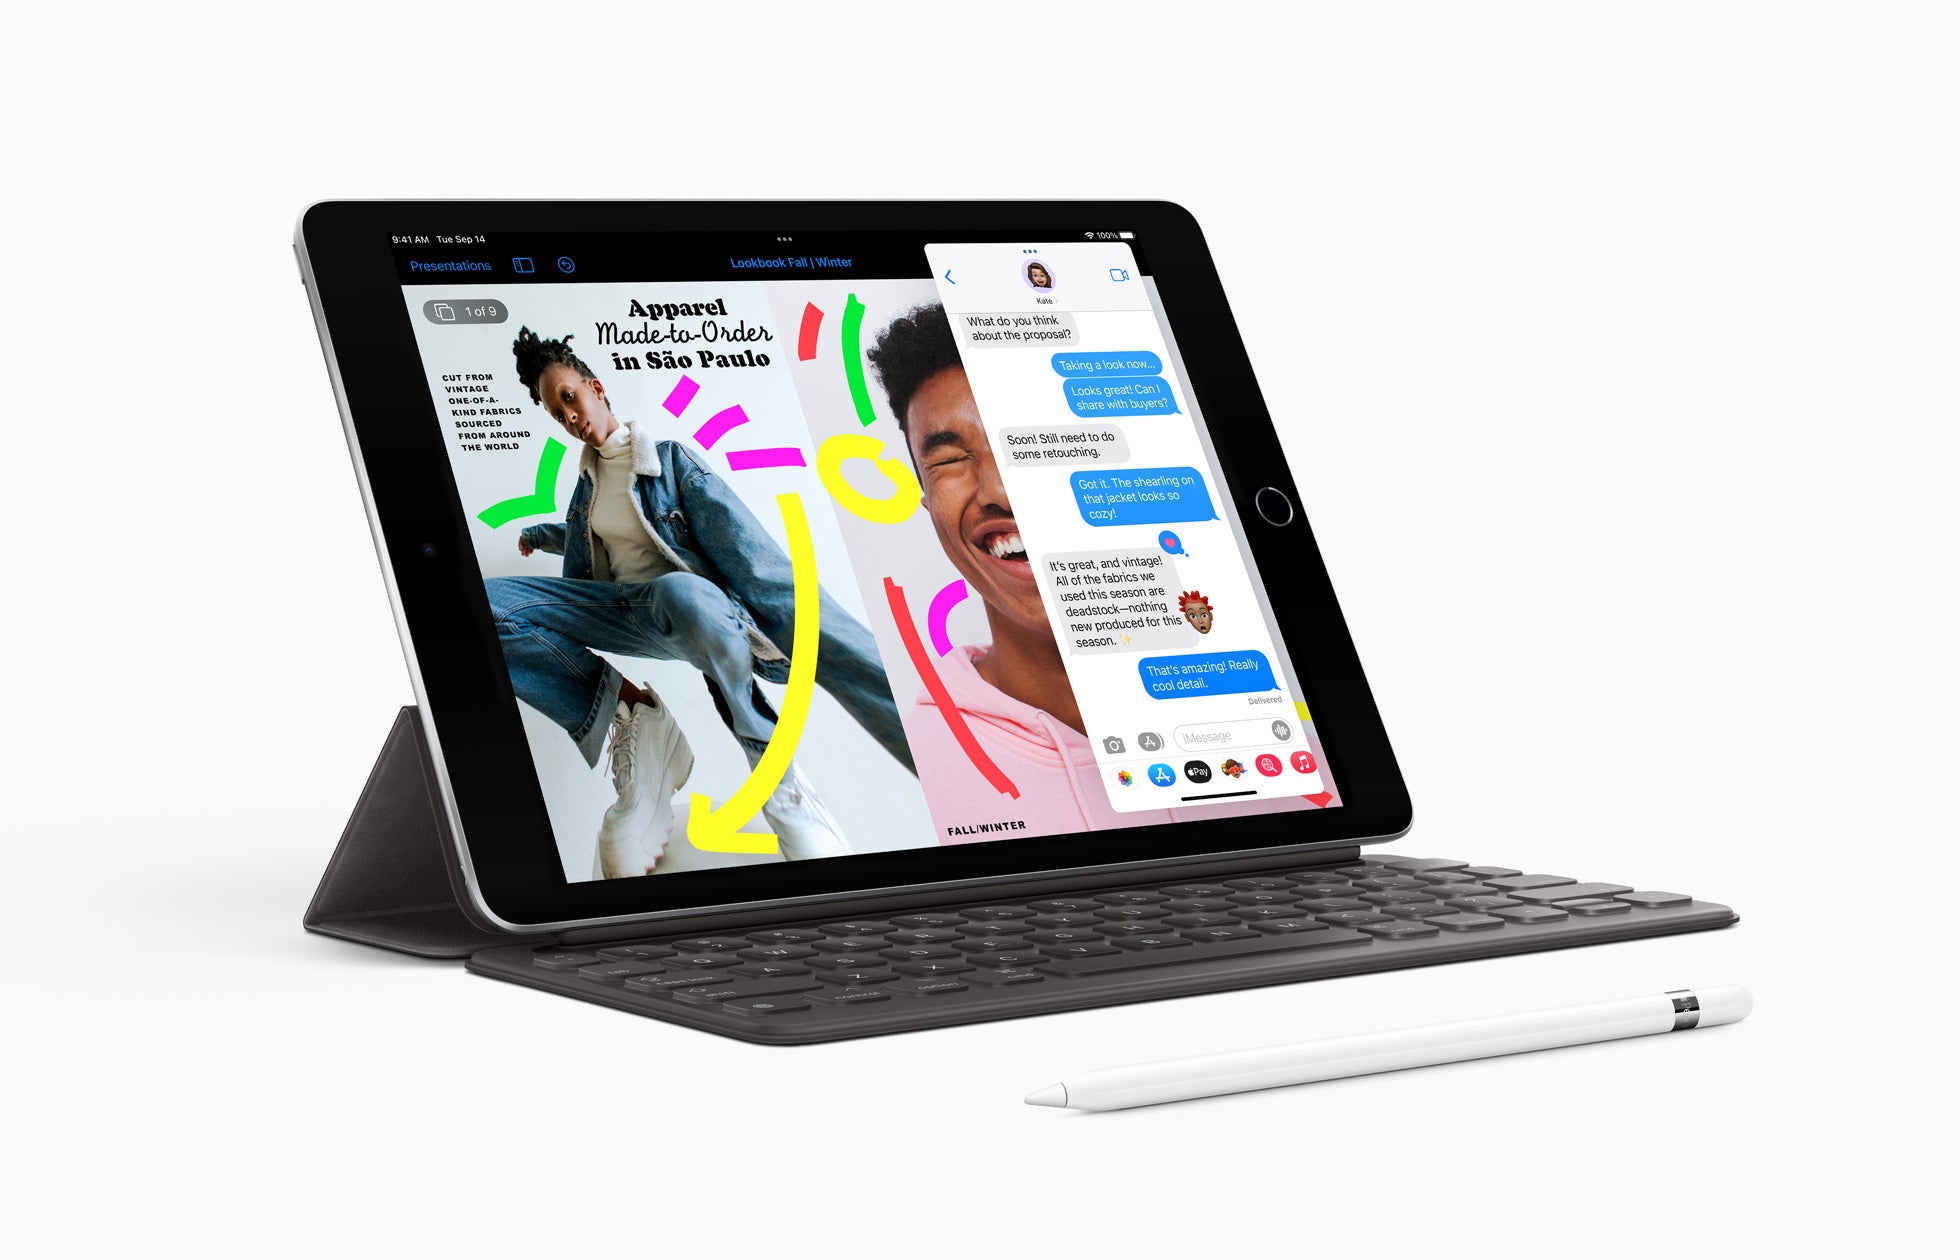 The new ninth generation iPad